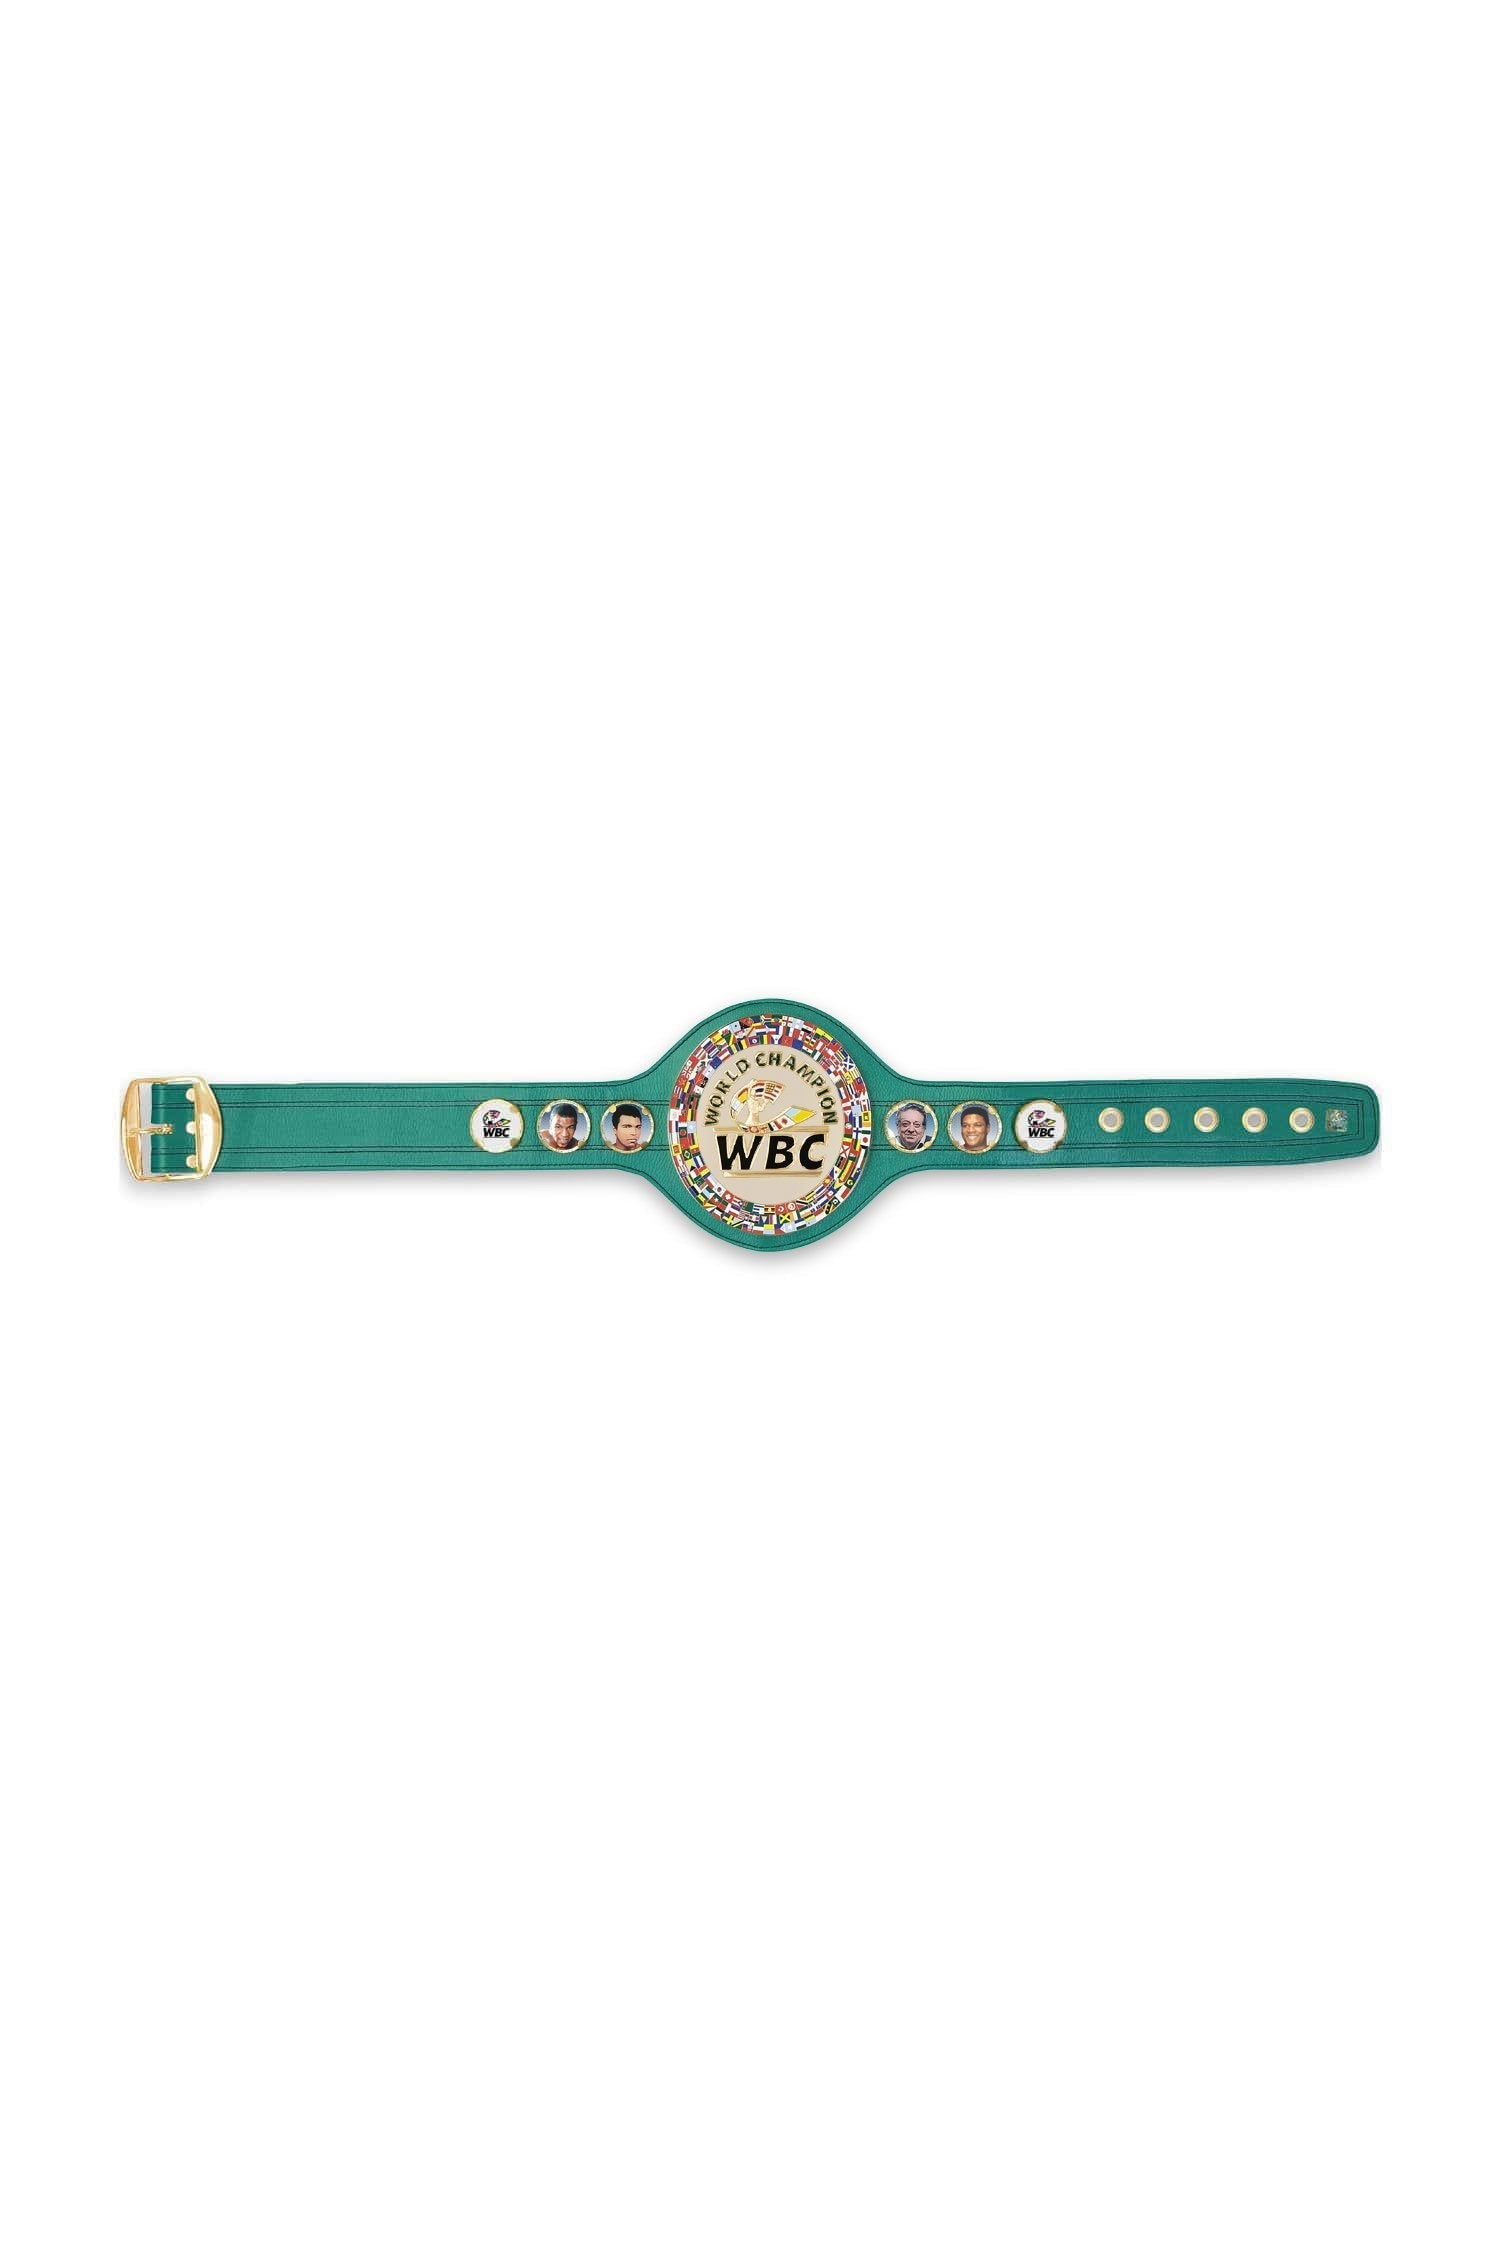 WBC Store Replica Belts WBC Championship Belt  "Historic Fights" Mike Tyson vs. Trevor Berbick